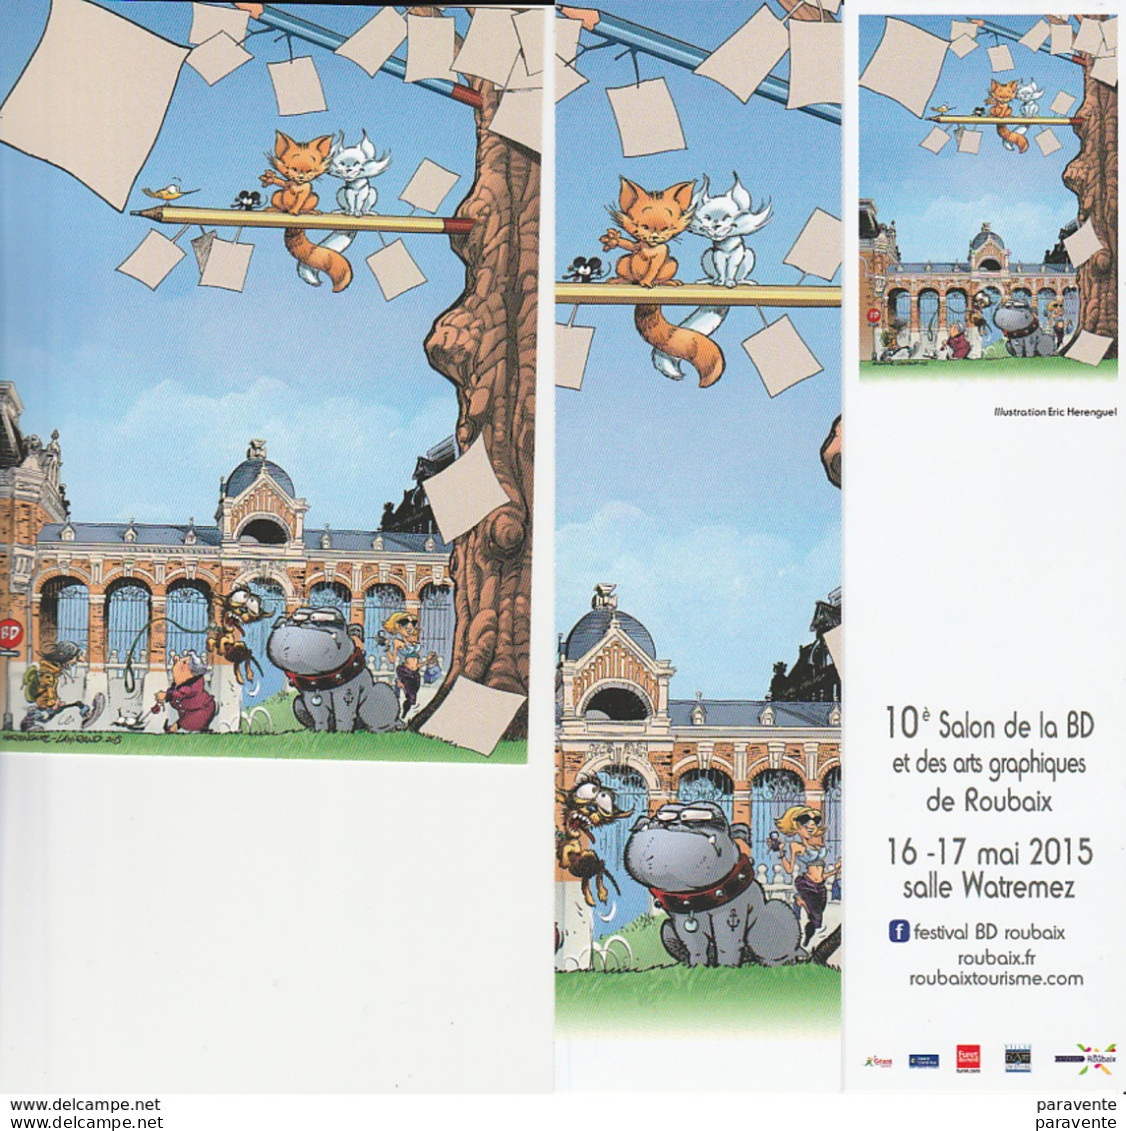 HERENGUEL Lot De 4 Objets ( DUO + FLYER + PROGRAMME ) Salon ROUBAIX 2015 - Bookmarks